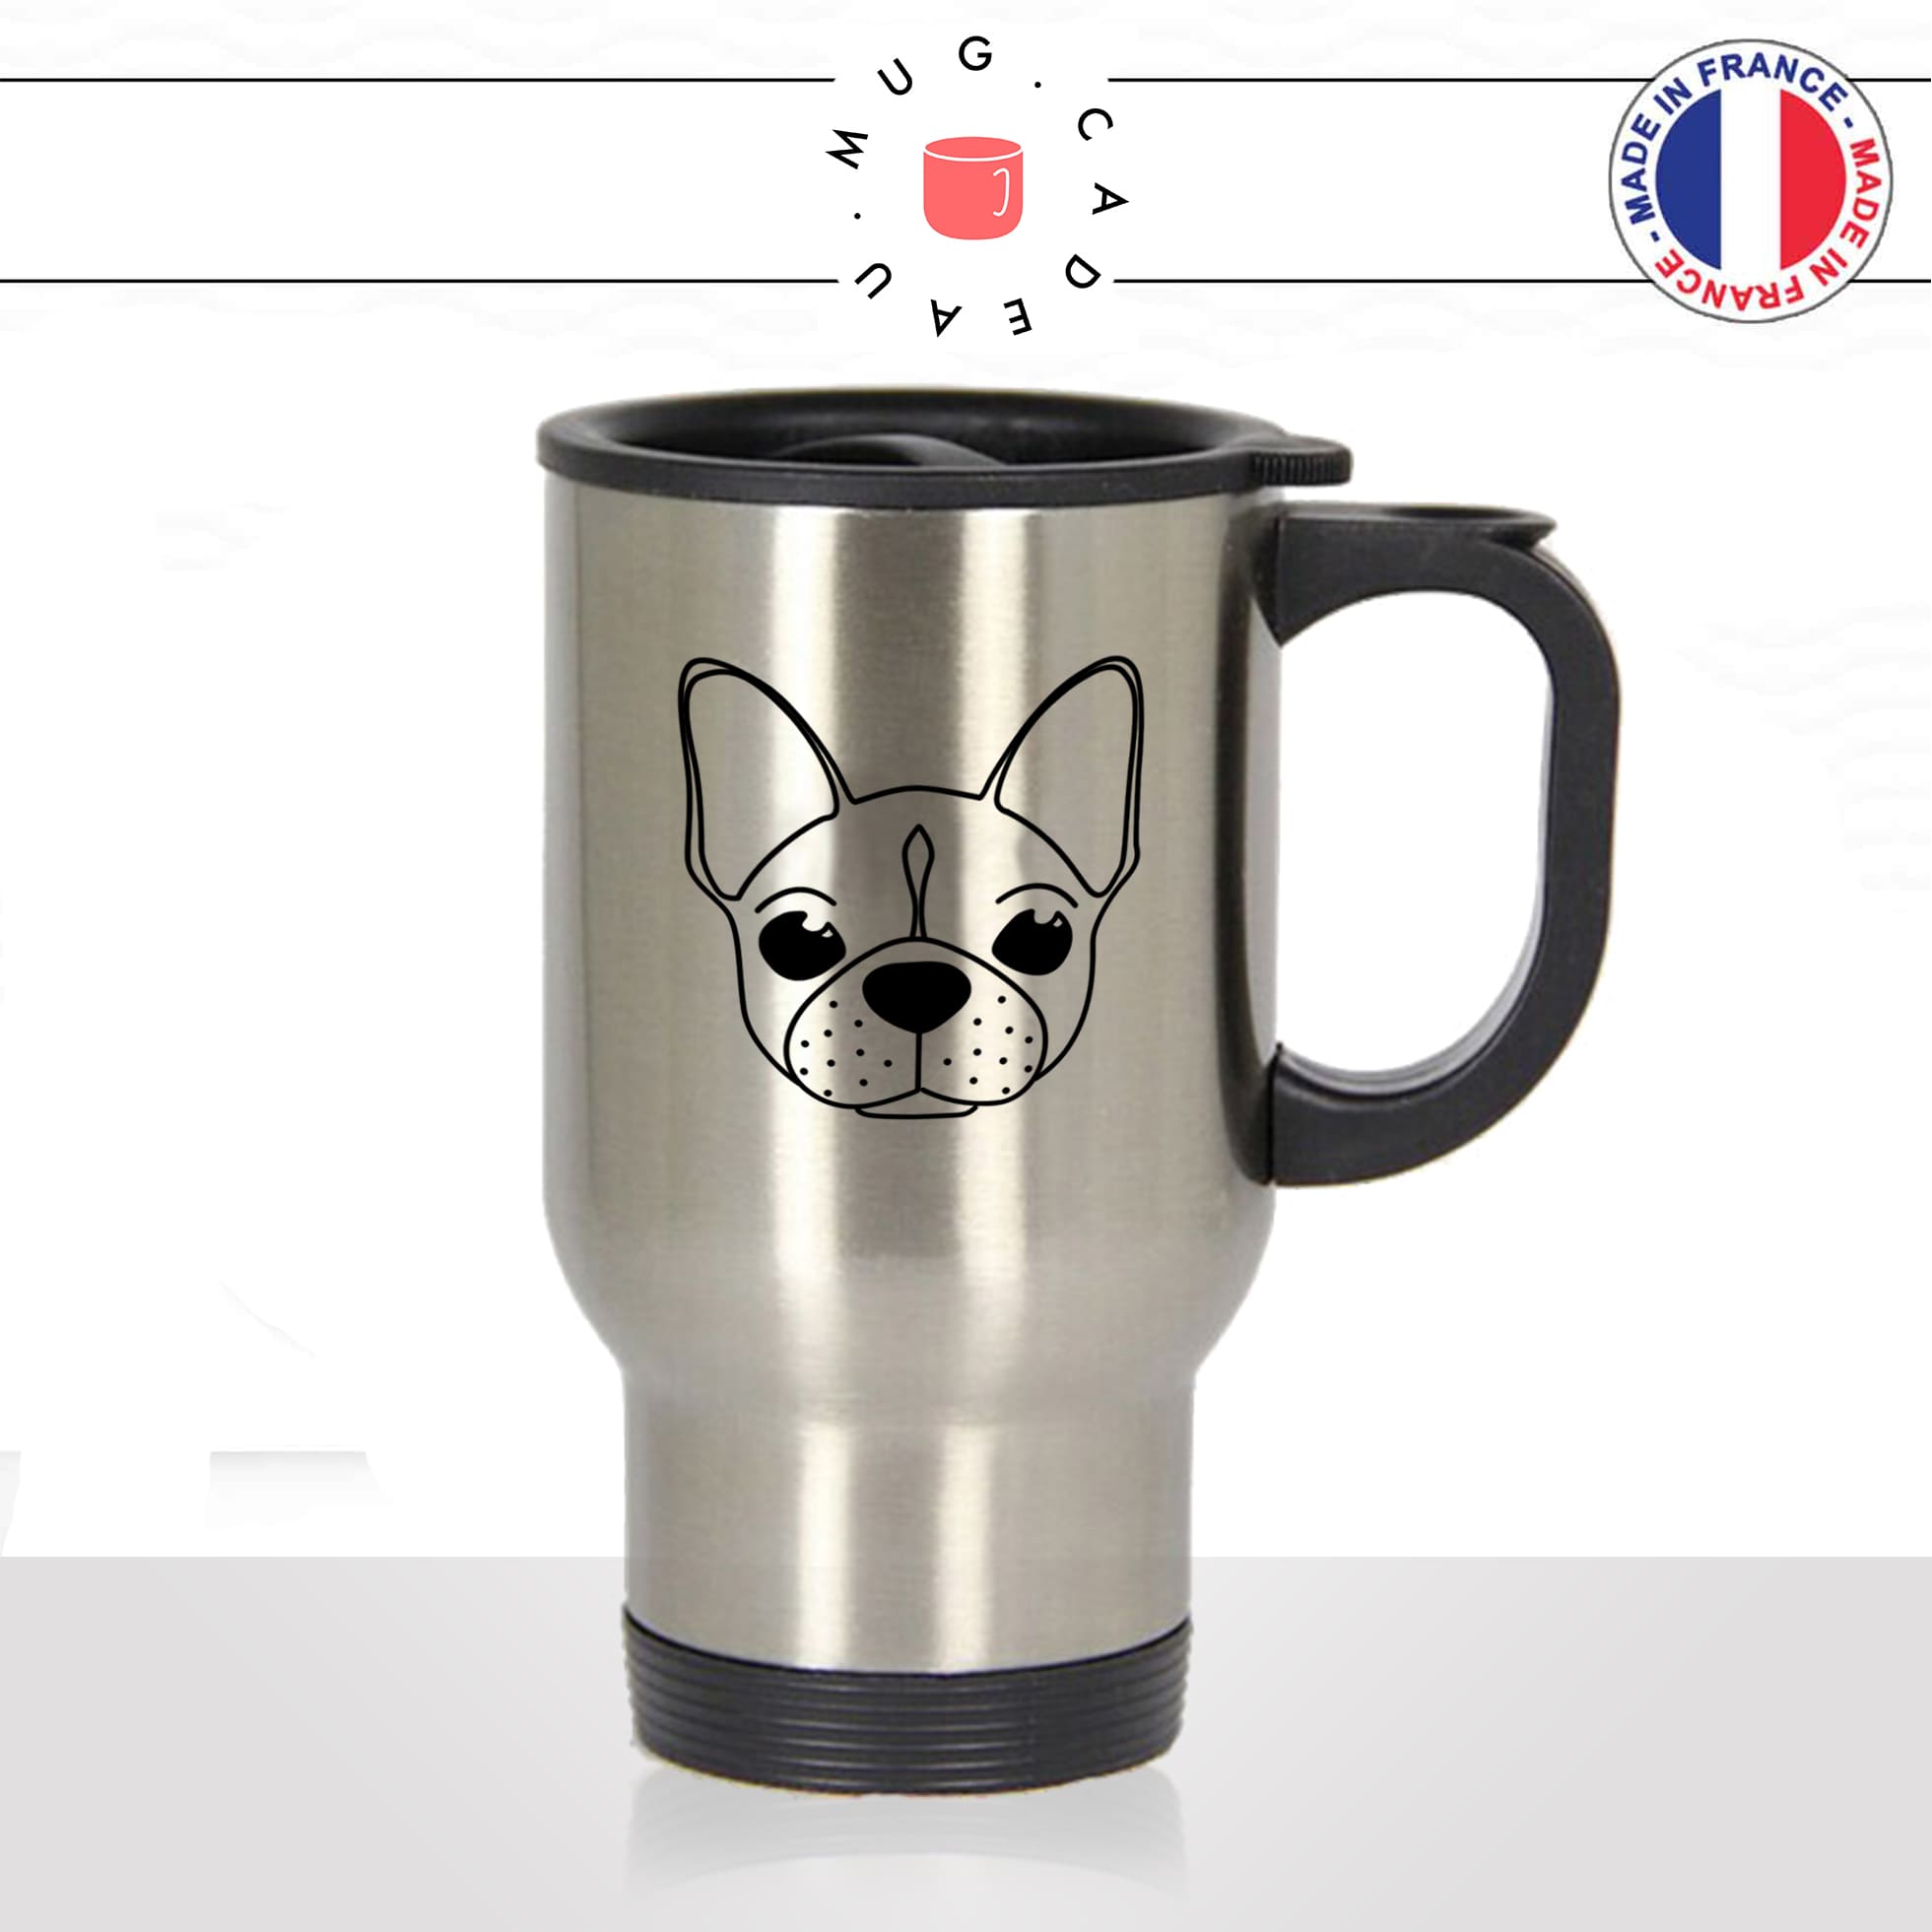 mug-tasse-thermos-de-voyage-inox-gris-chien-pug-bulldog-maitre-mignon-dessin-chiot-animal-mignon-idée-cadeau-original-unique2